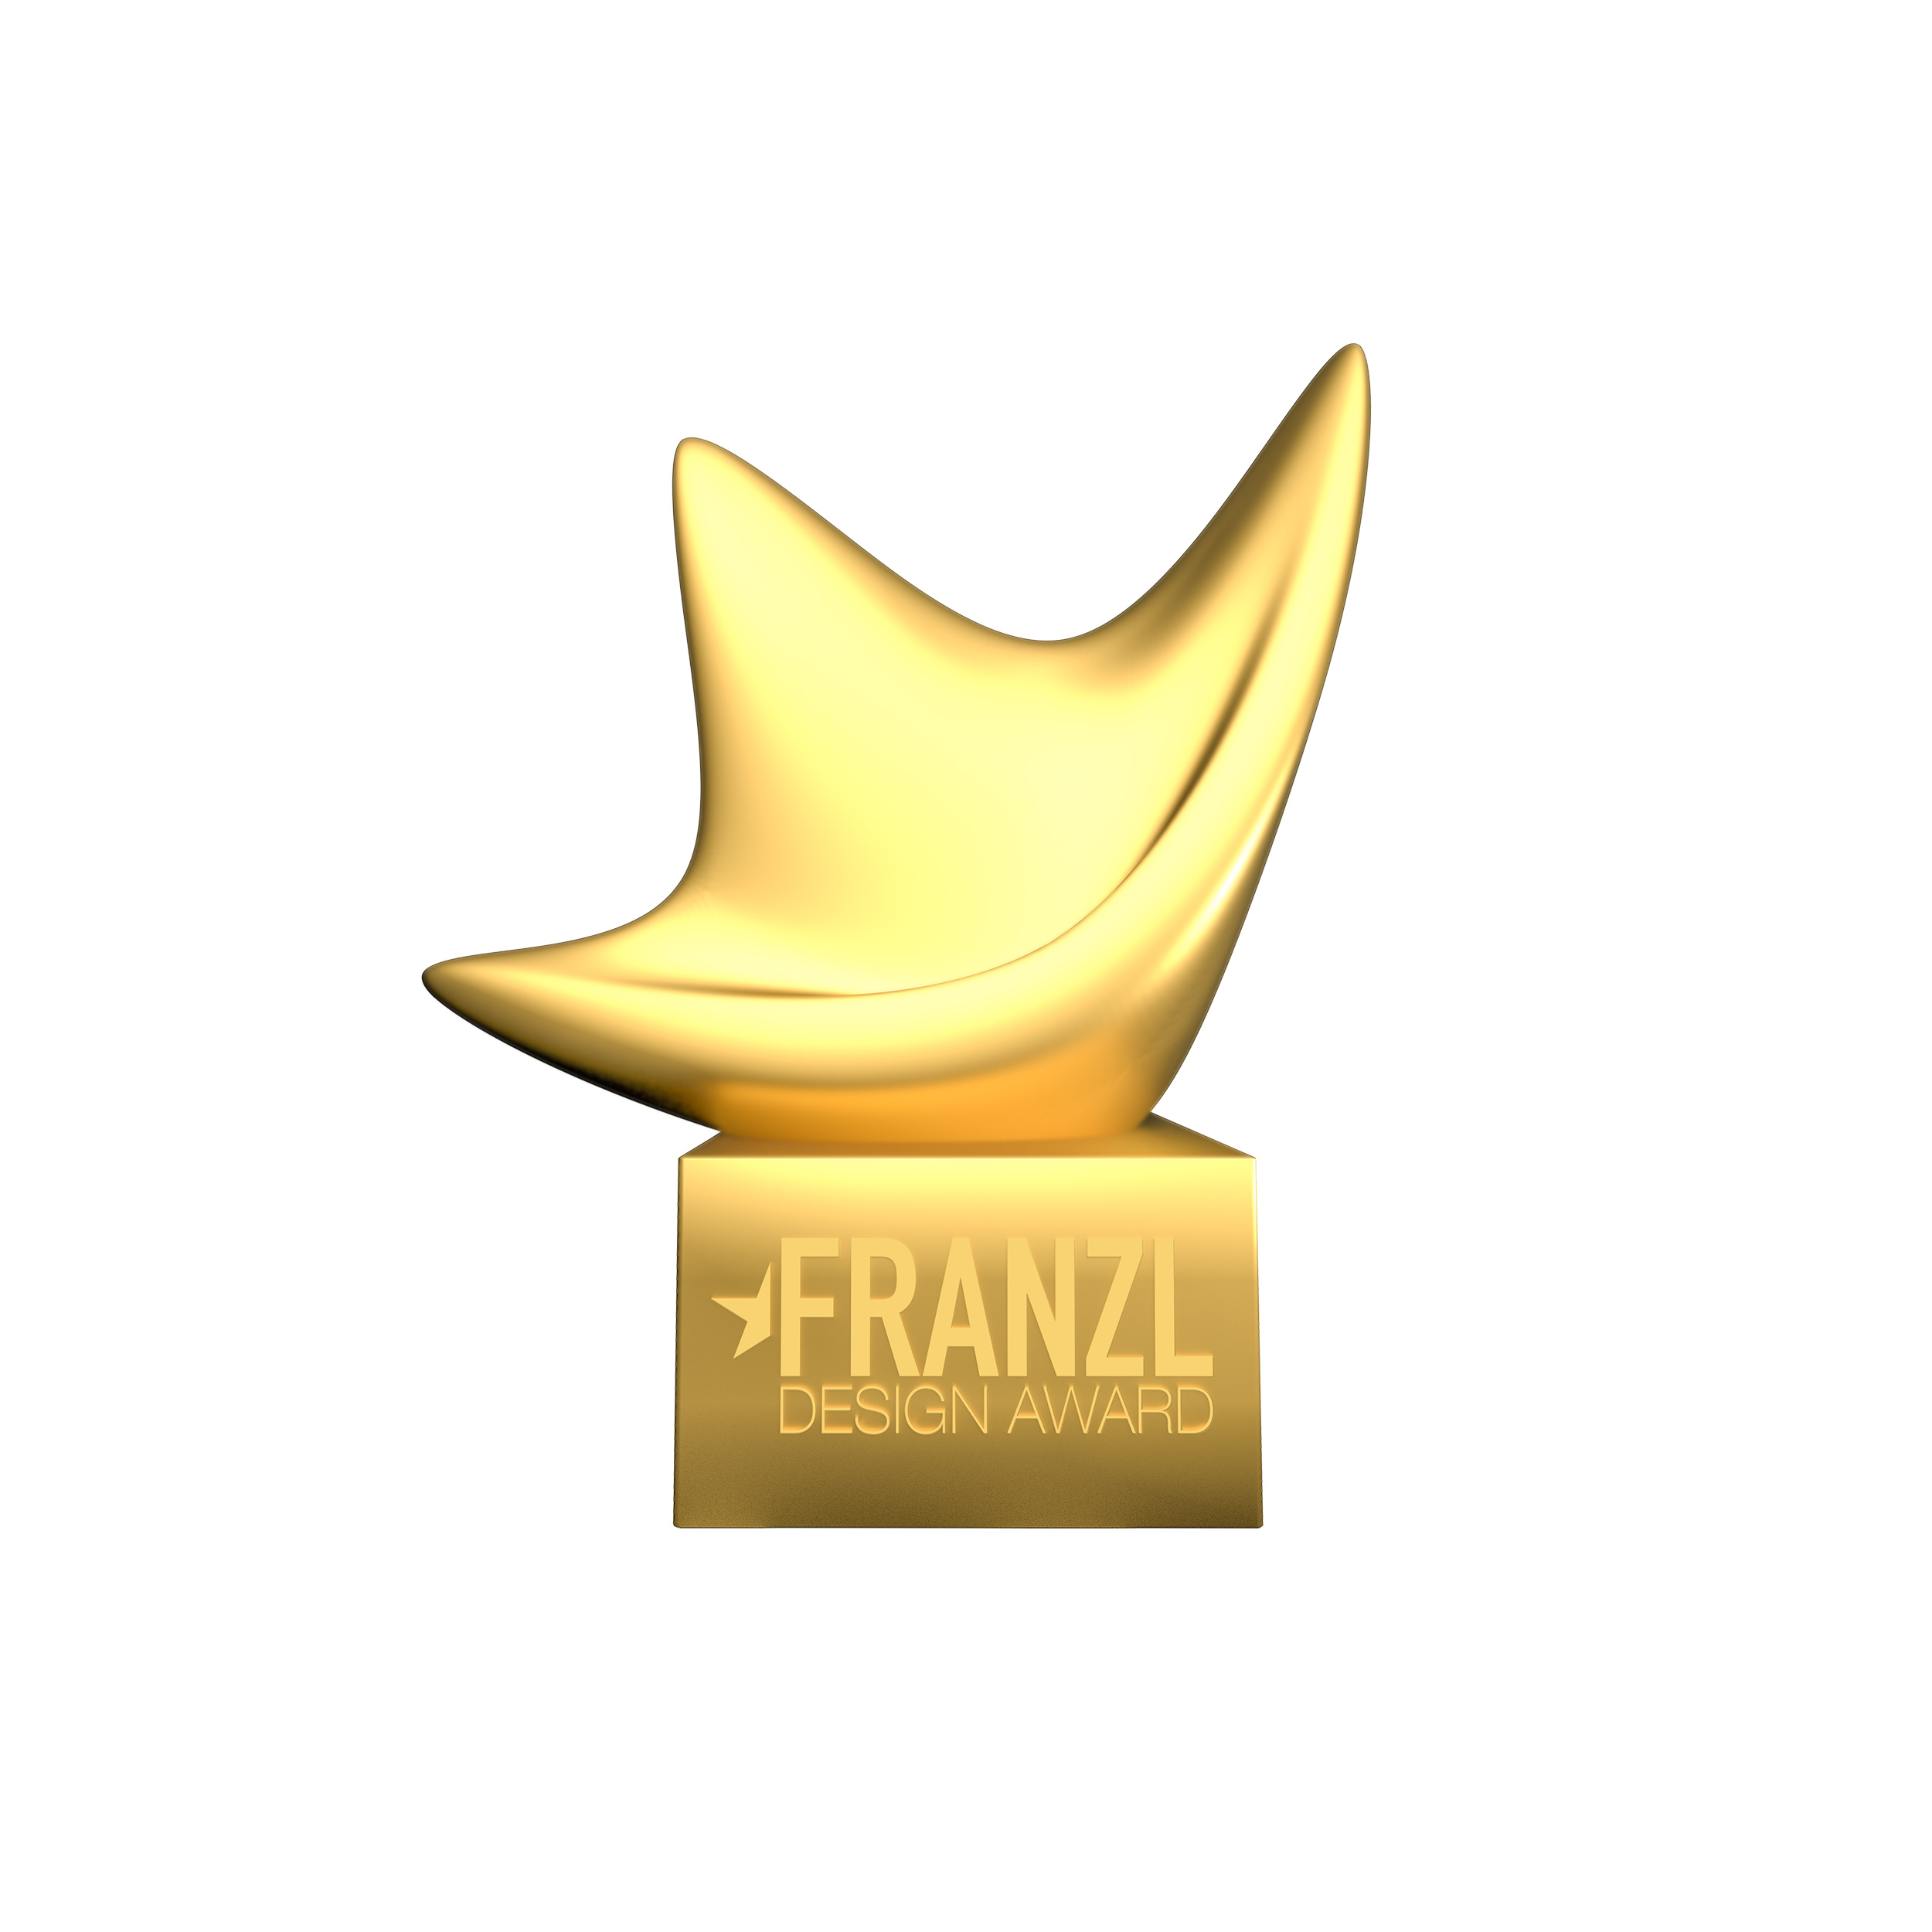 Franzl Design Award